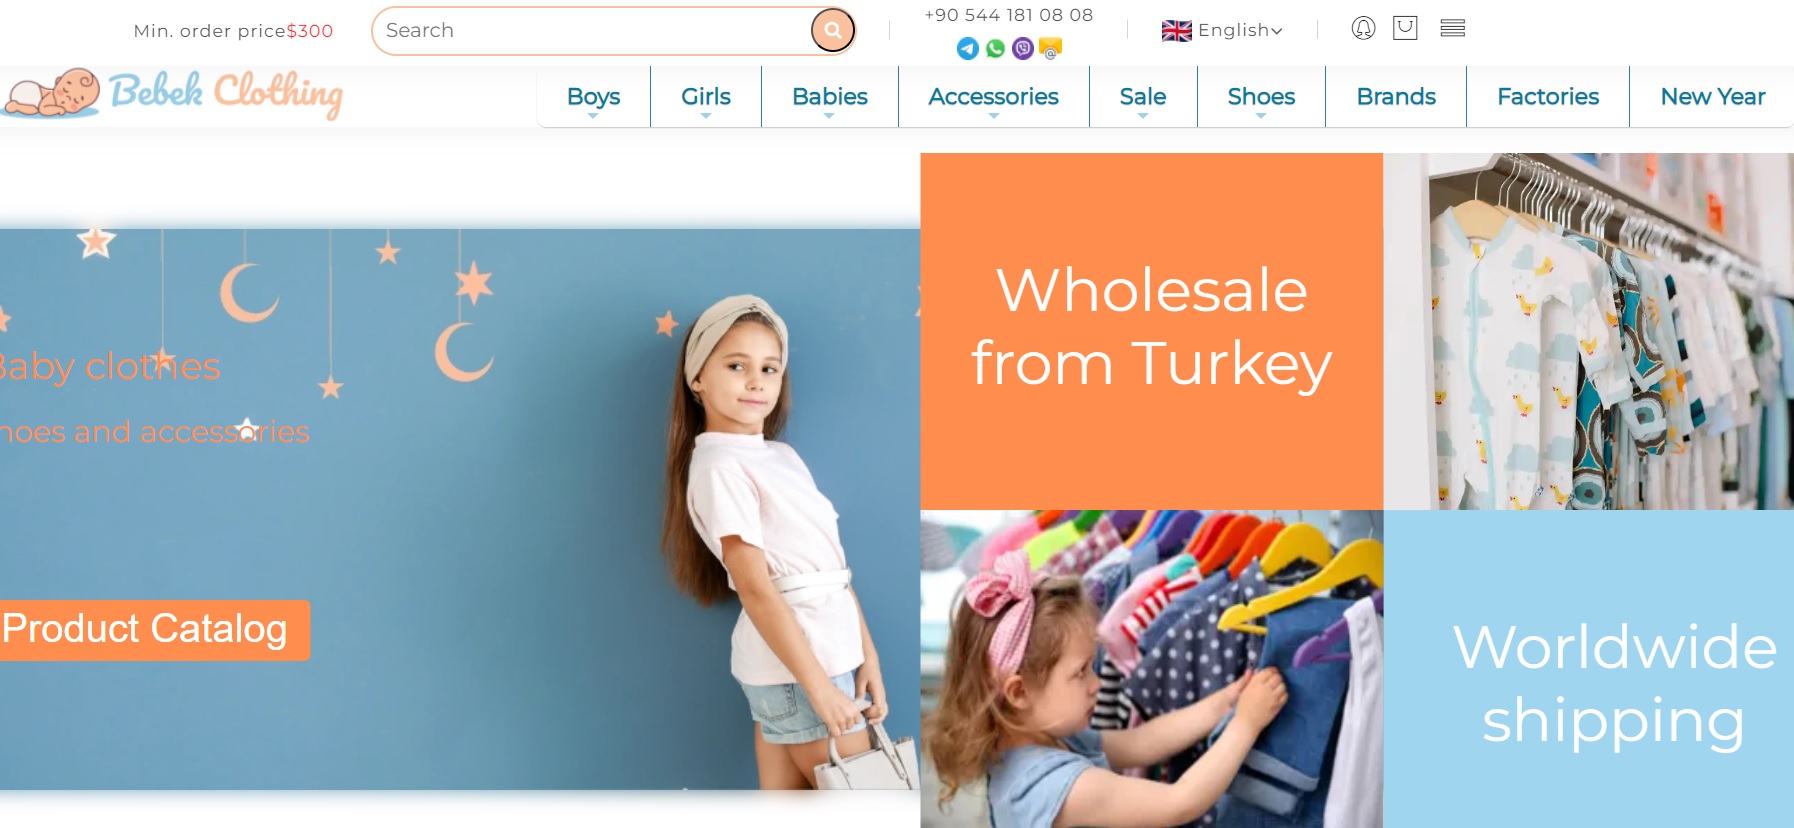 bebek.clothing wholesale kidswear Turkey